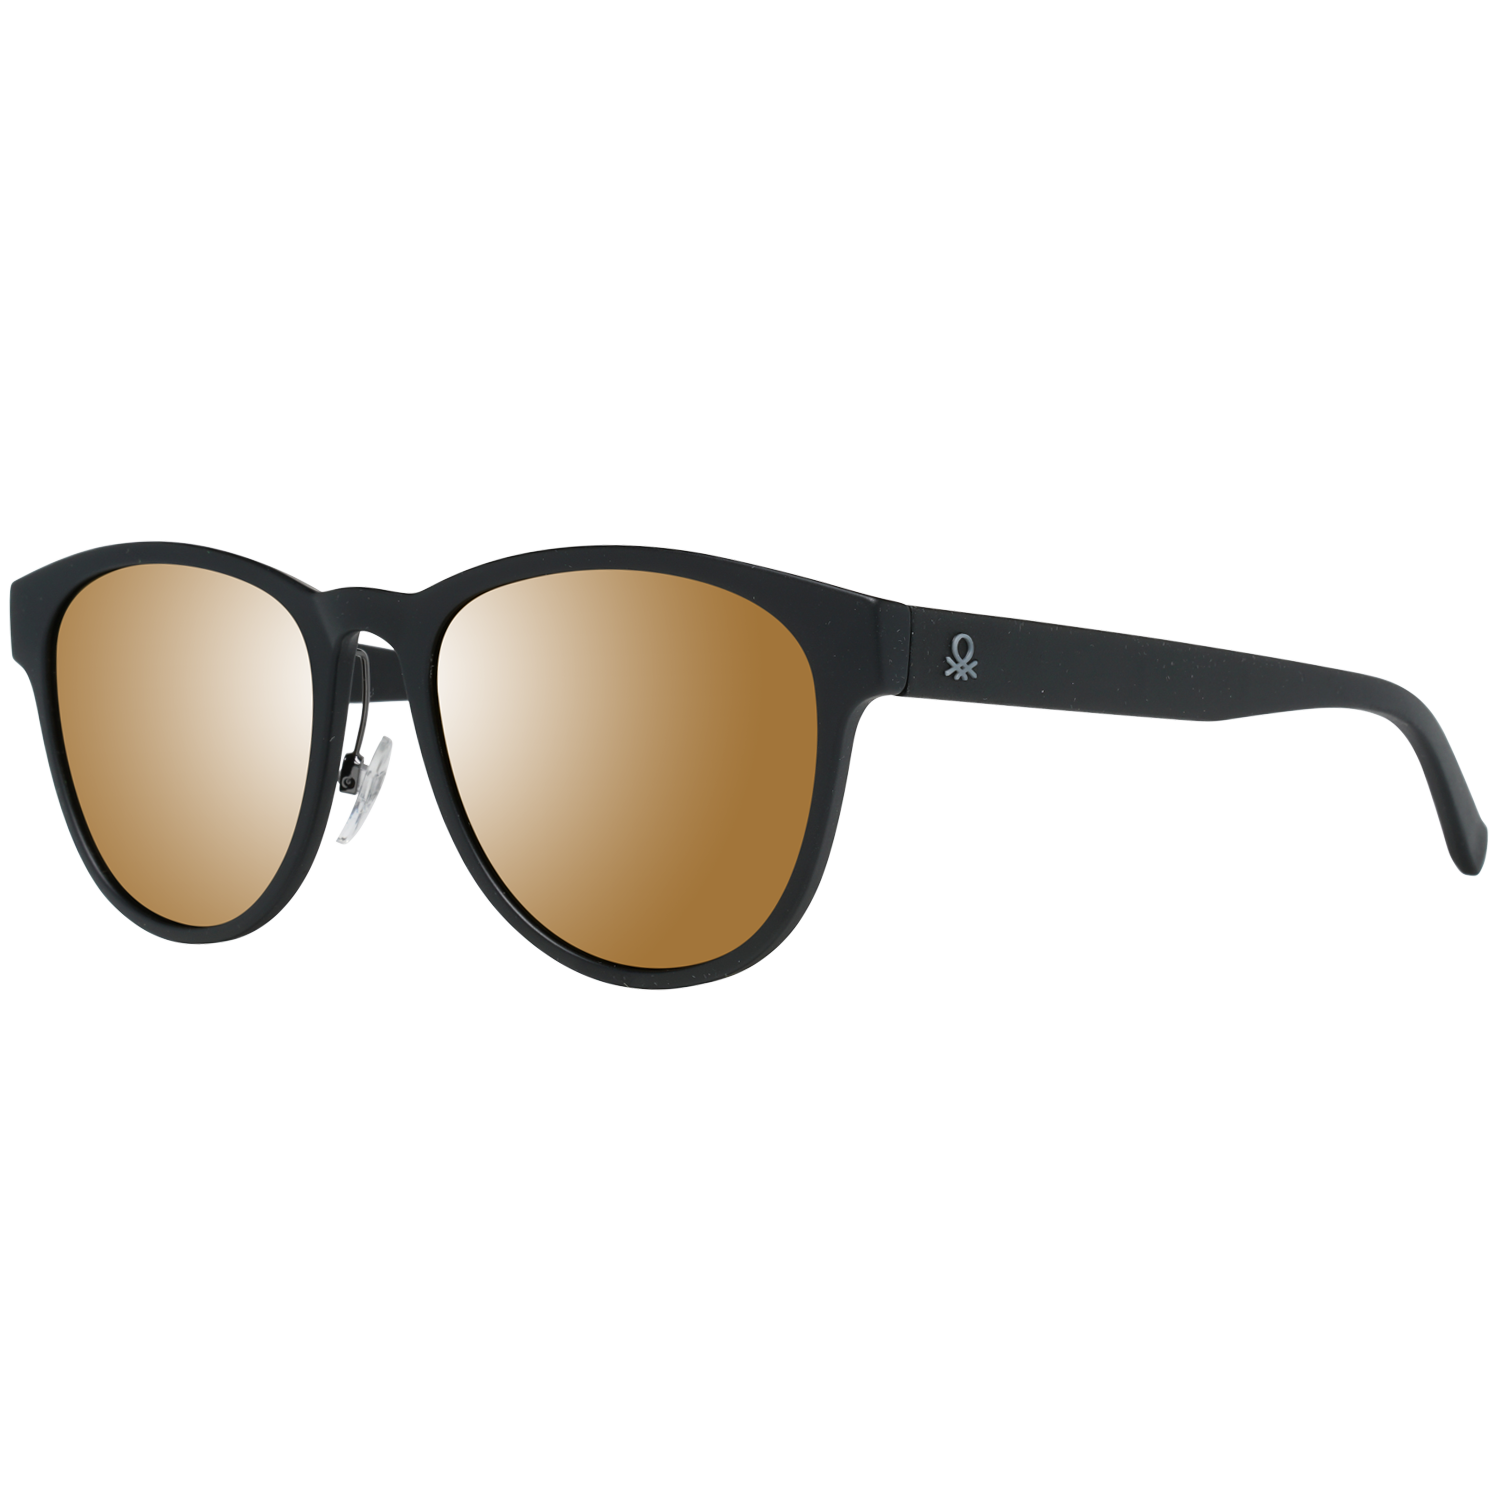 Benetton Sunglasses BE5011 001 55 Black